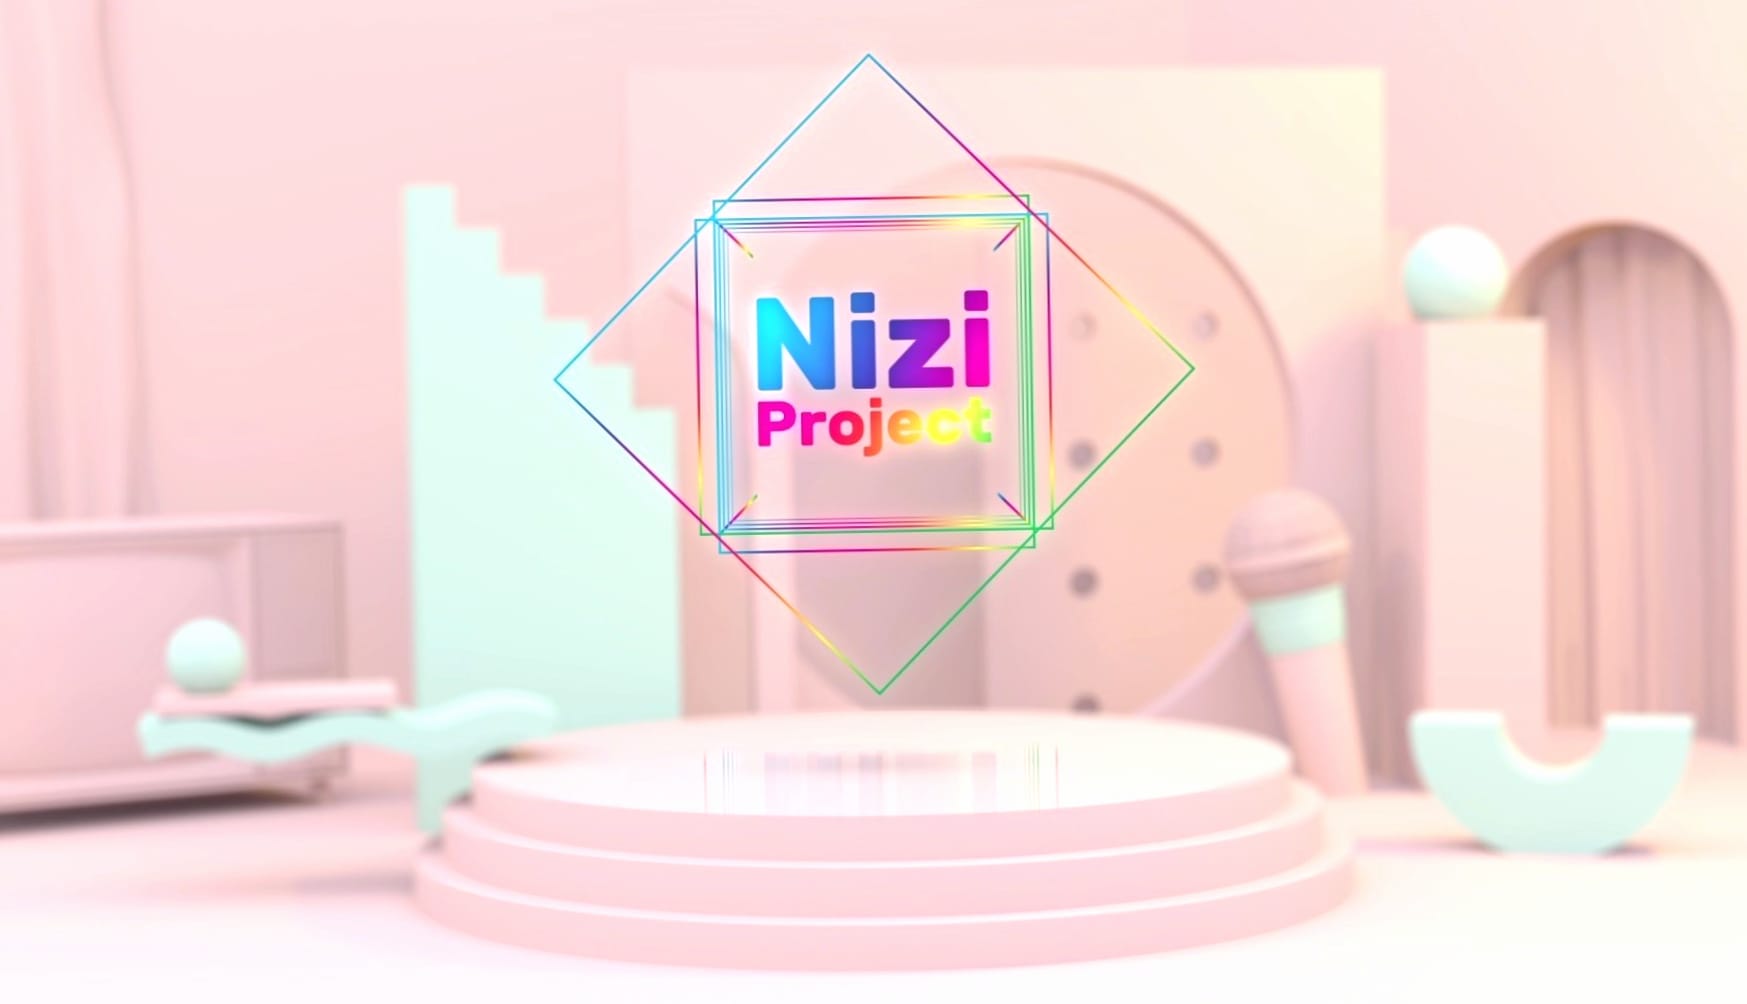 Nizi Project wallpapers HD quality